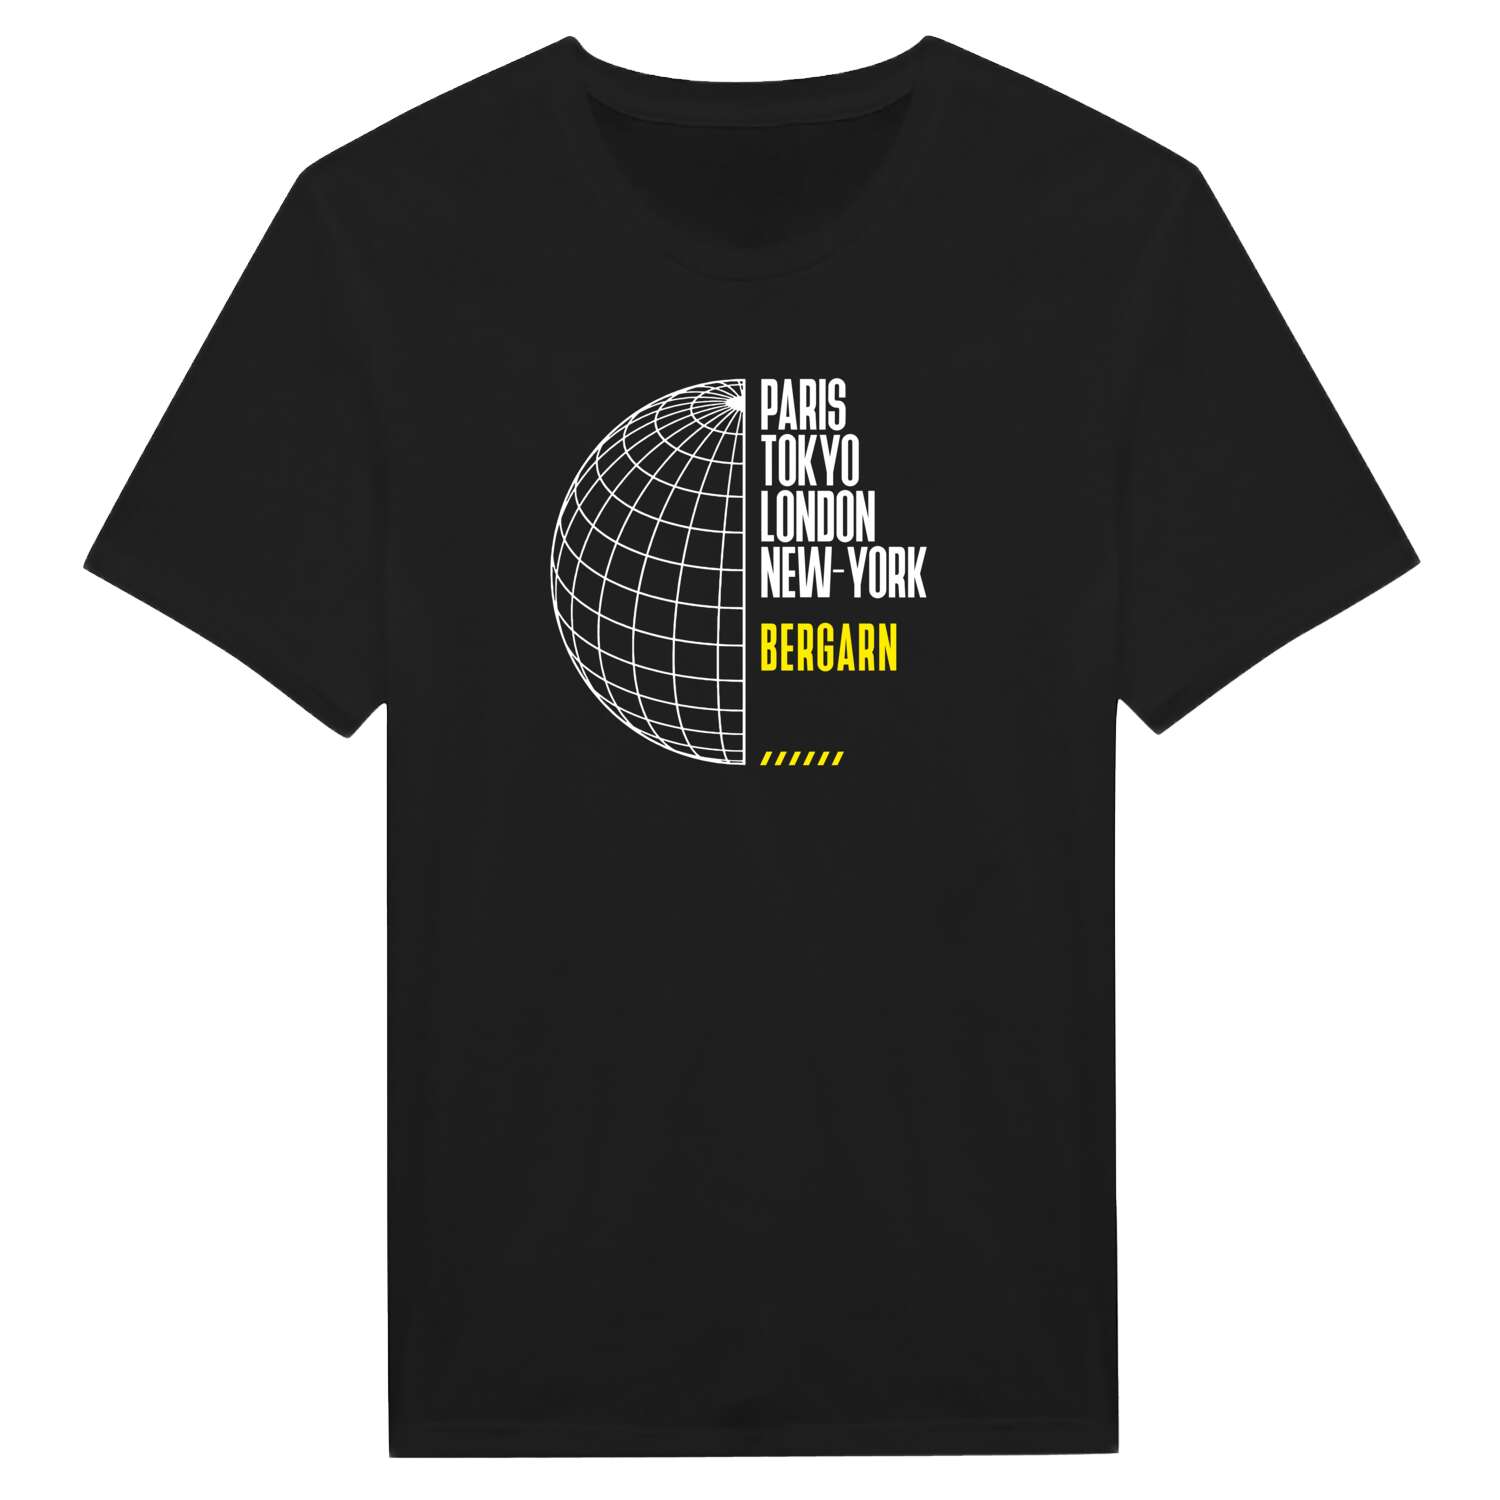 Bergarn T-Shirt »Paris Tokyo London«